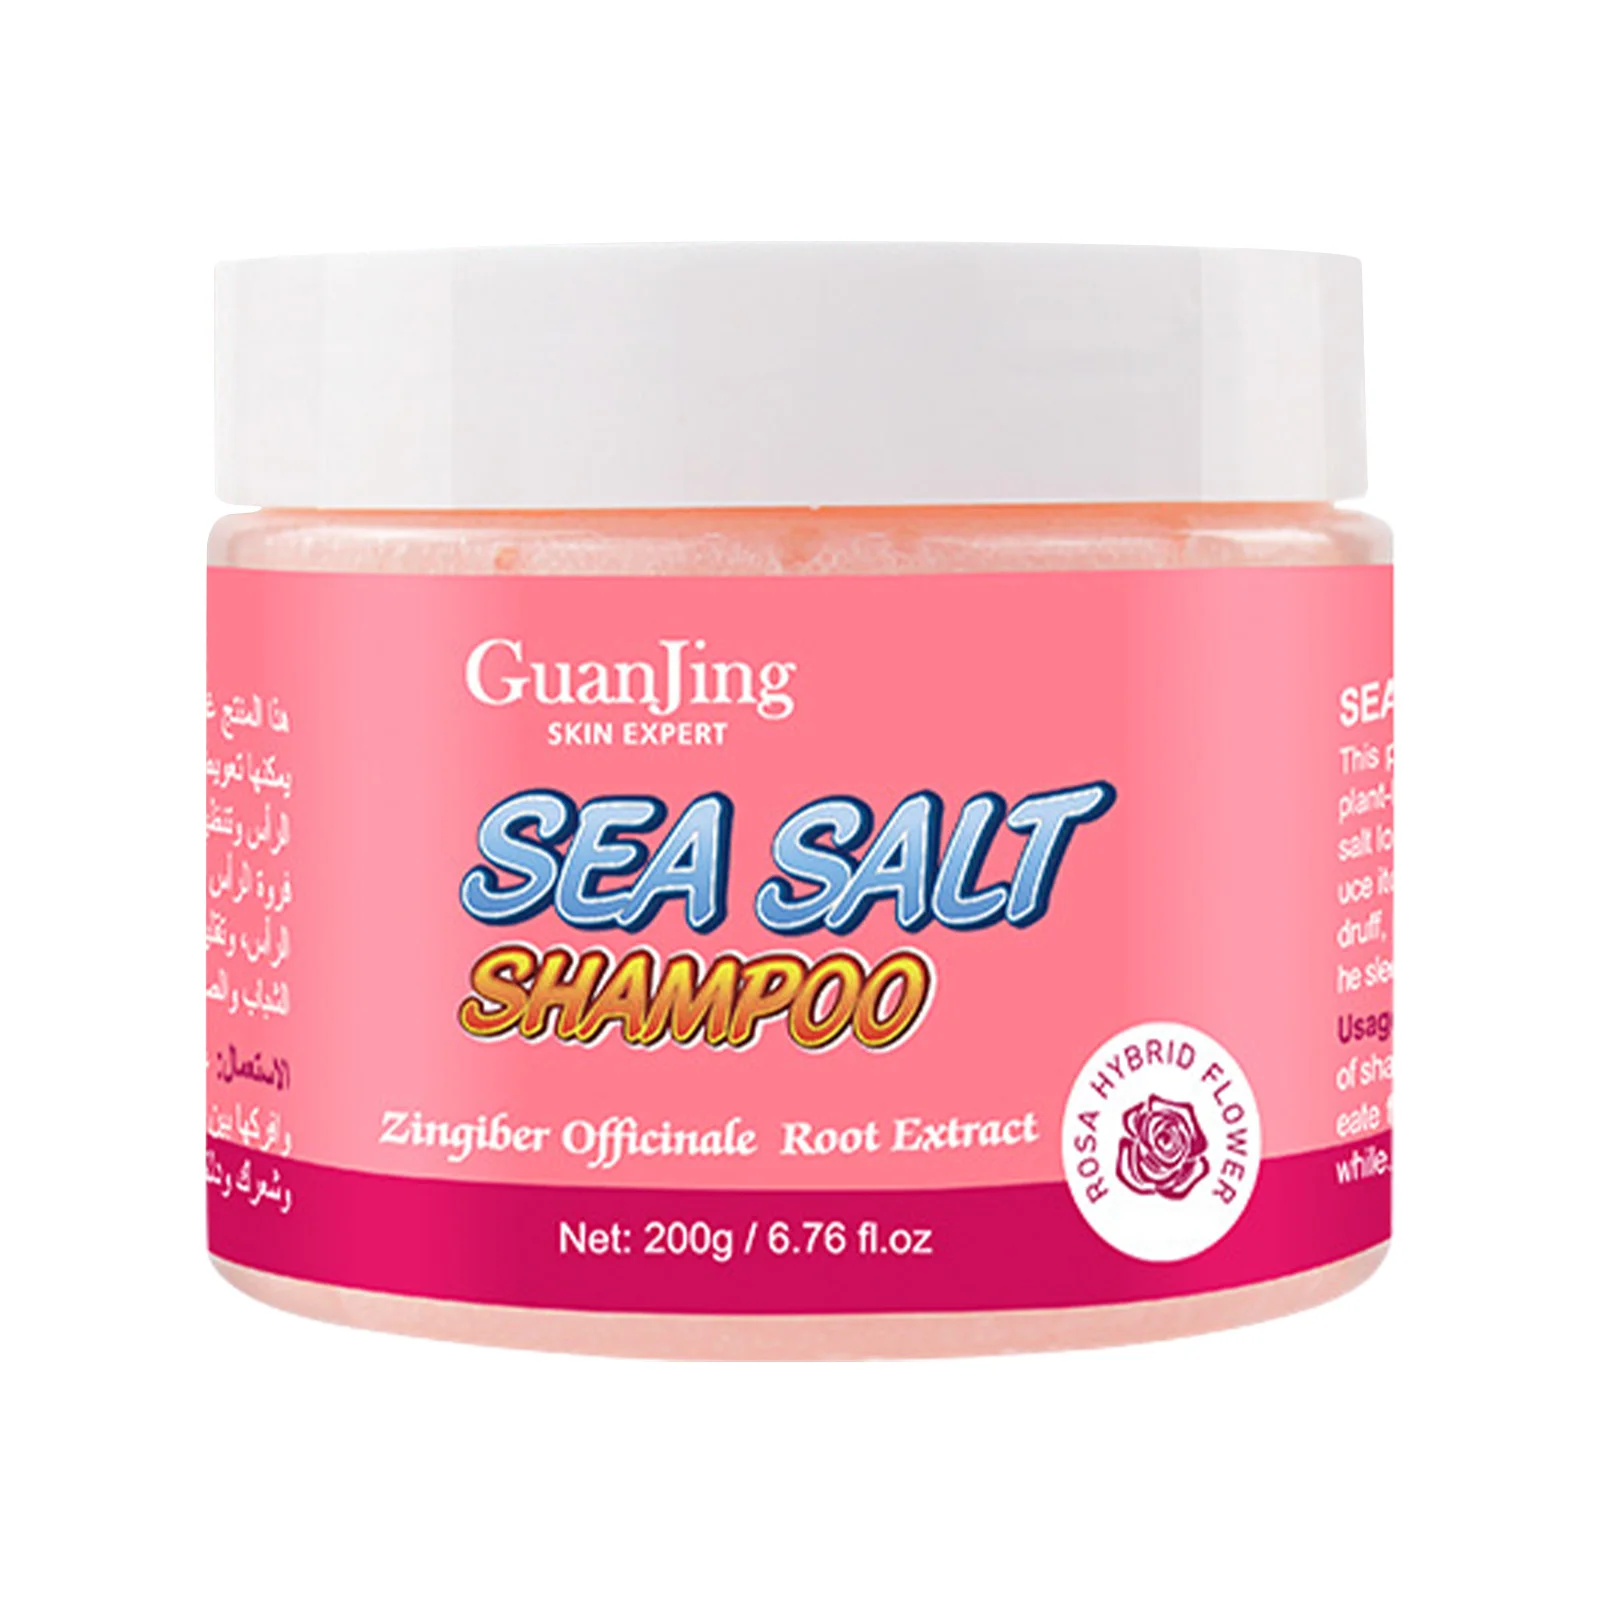 

Sea Salt Hair Shampoo Anti-Dandruff Shampoo For Itchy Scalp Shampoo Against Itchy Scalp Relief Anti-Dandruff And Dermatitis For